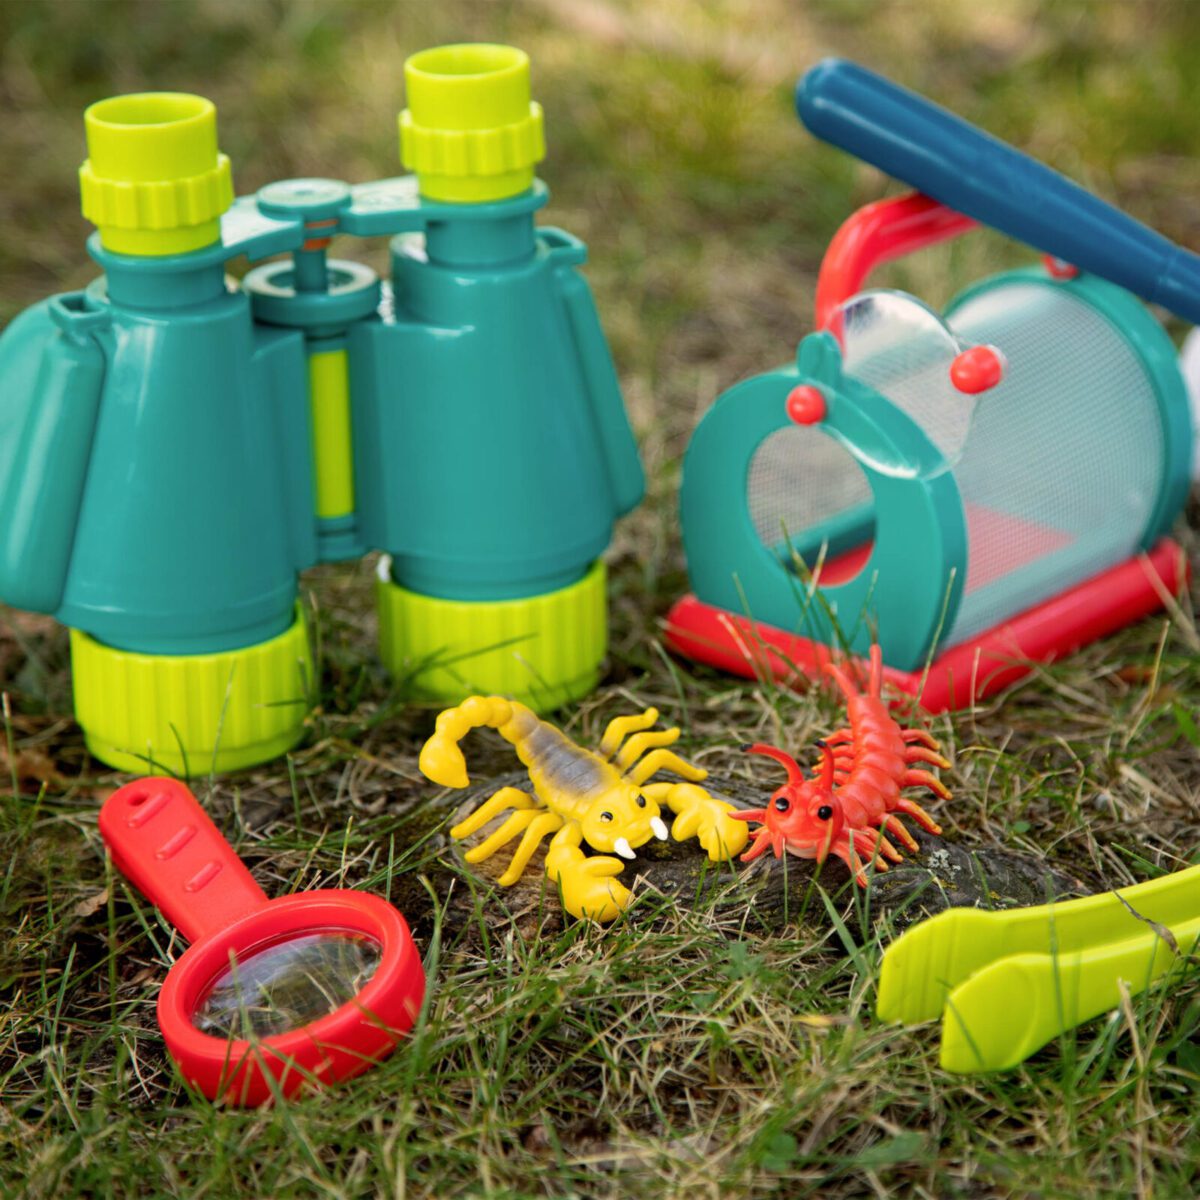 Comprar Set de Juguete Explorador Infantil en Colombia Marca B. Toys